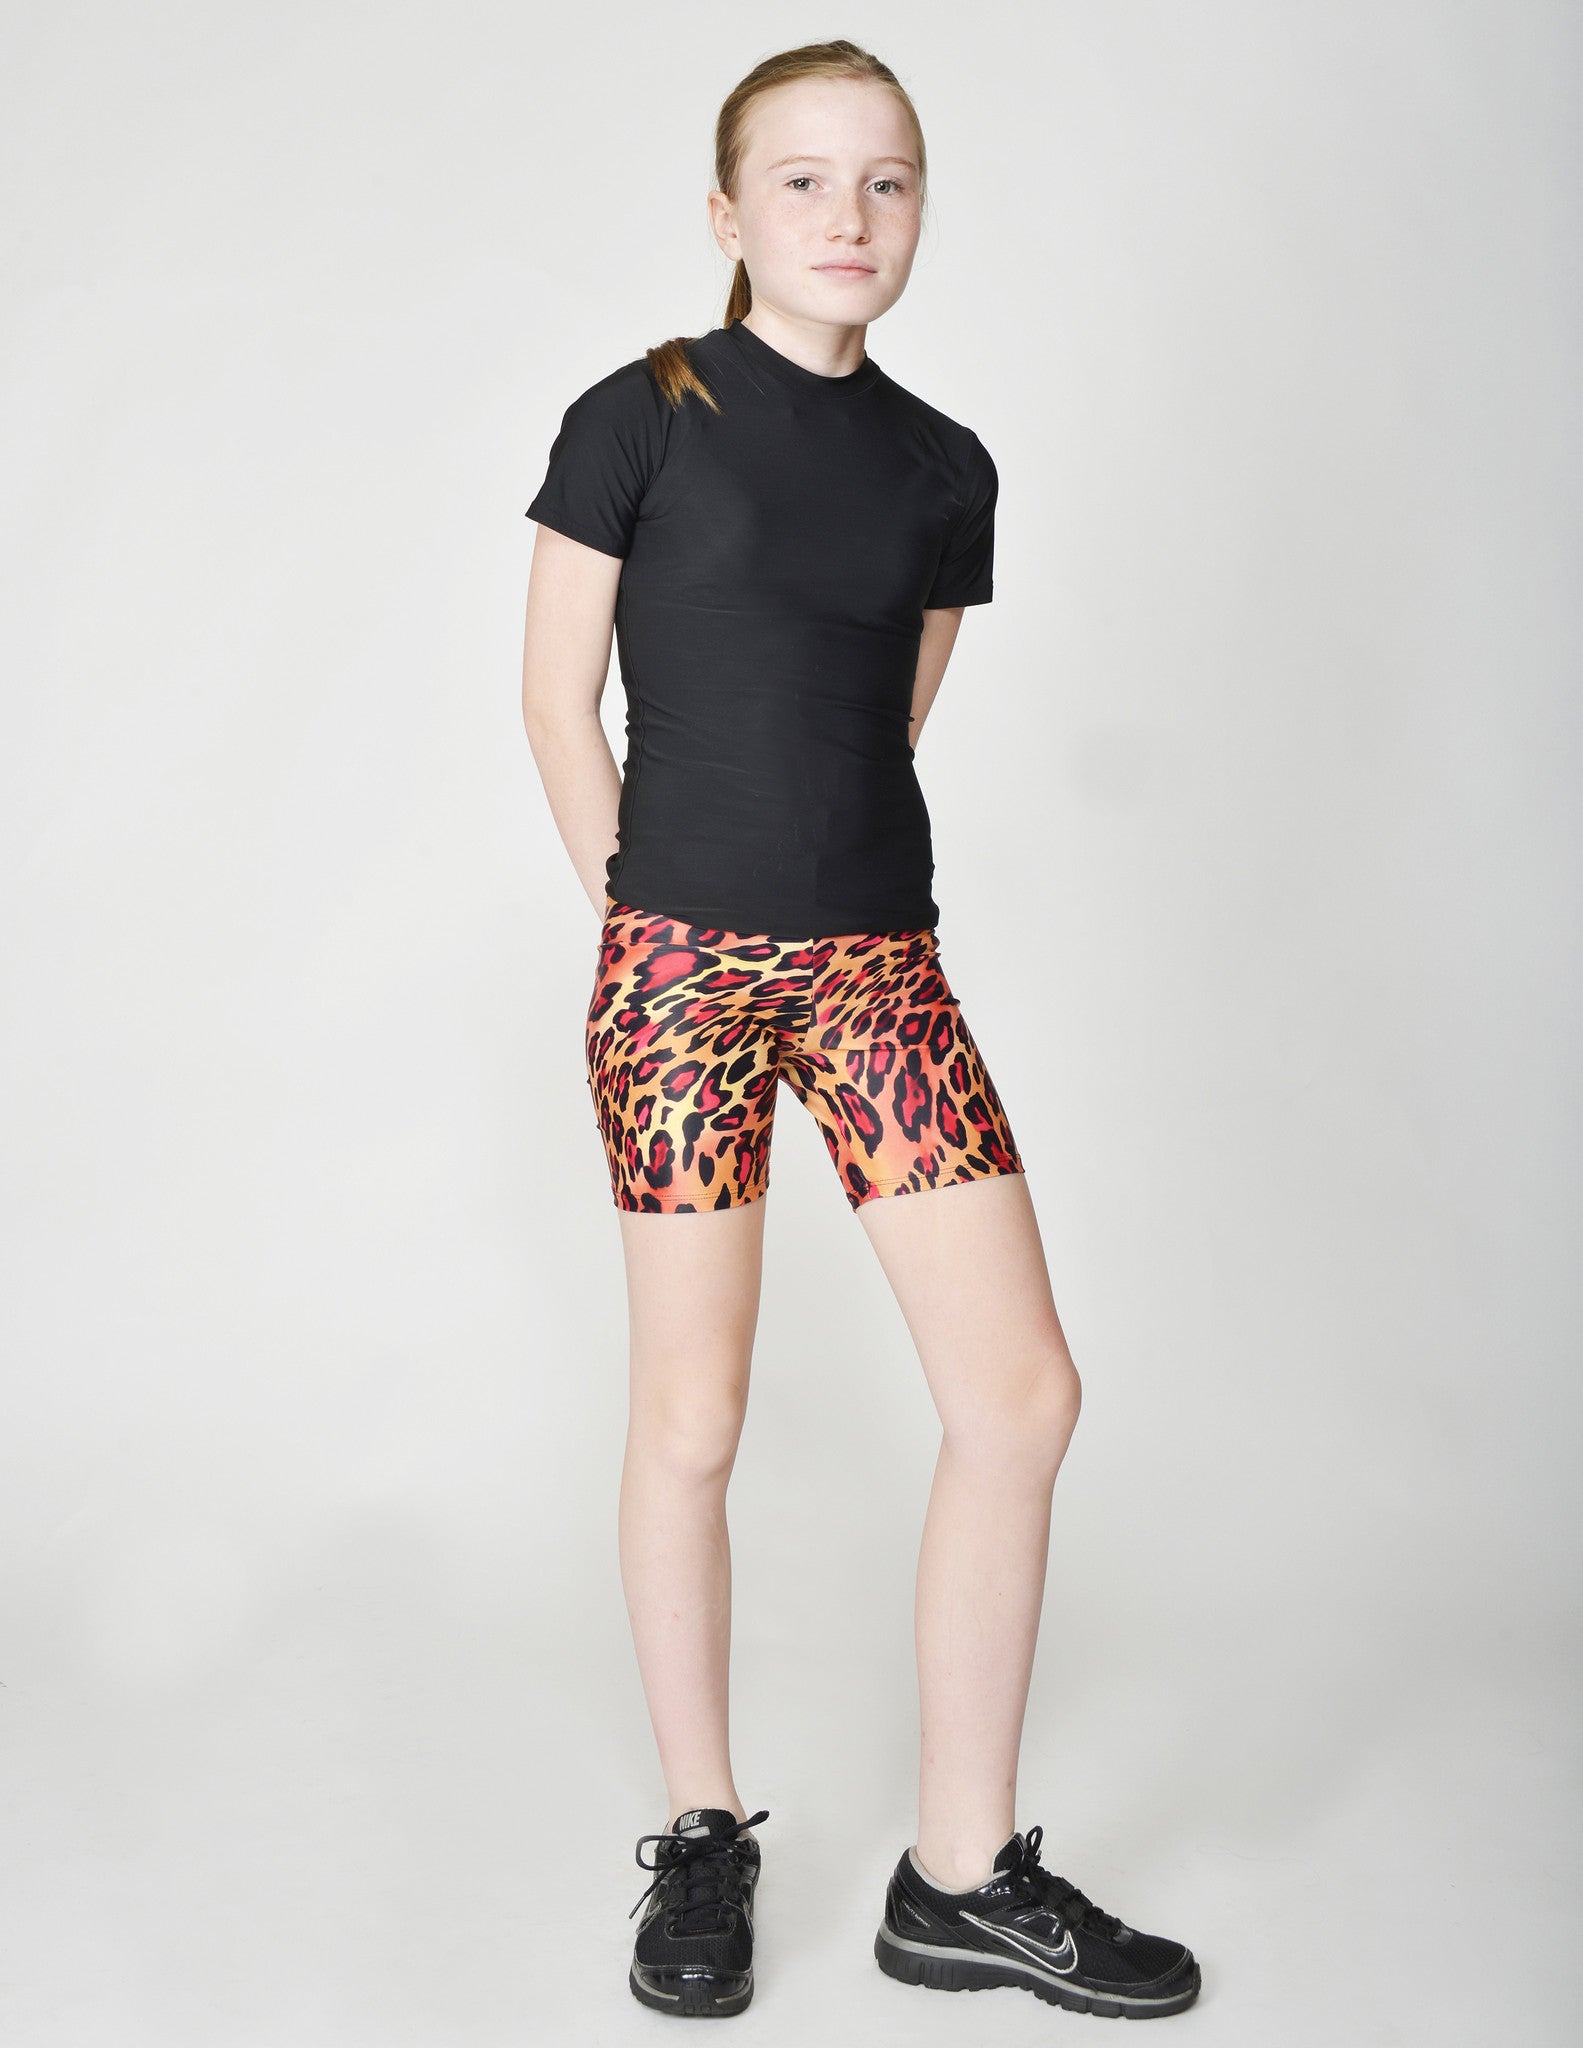 Leopard print spandex shorts